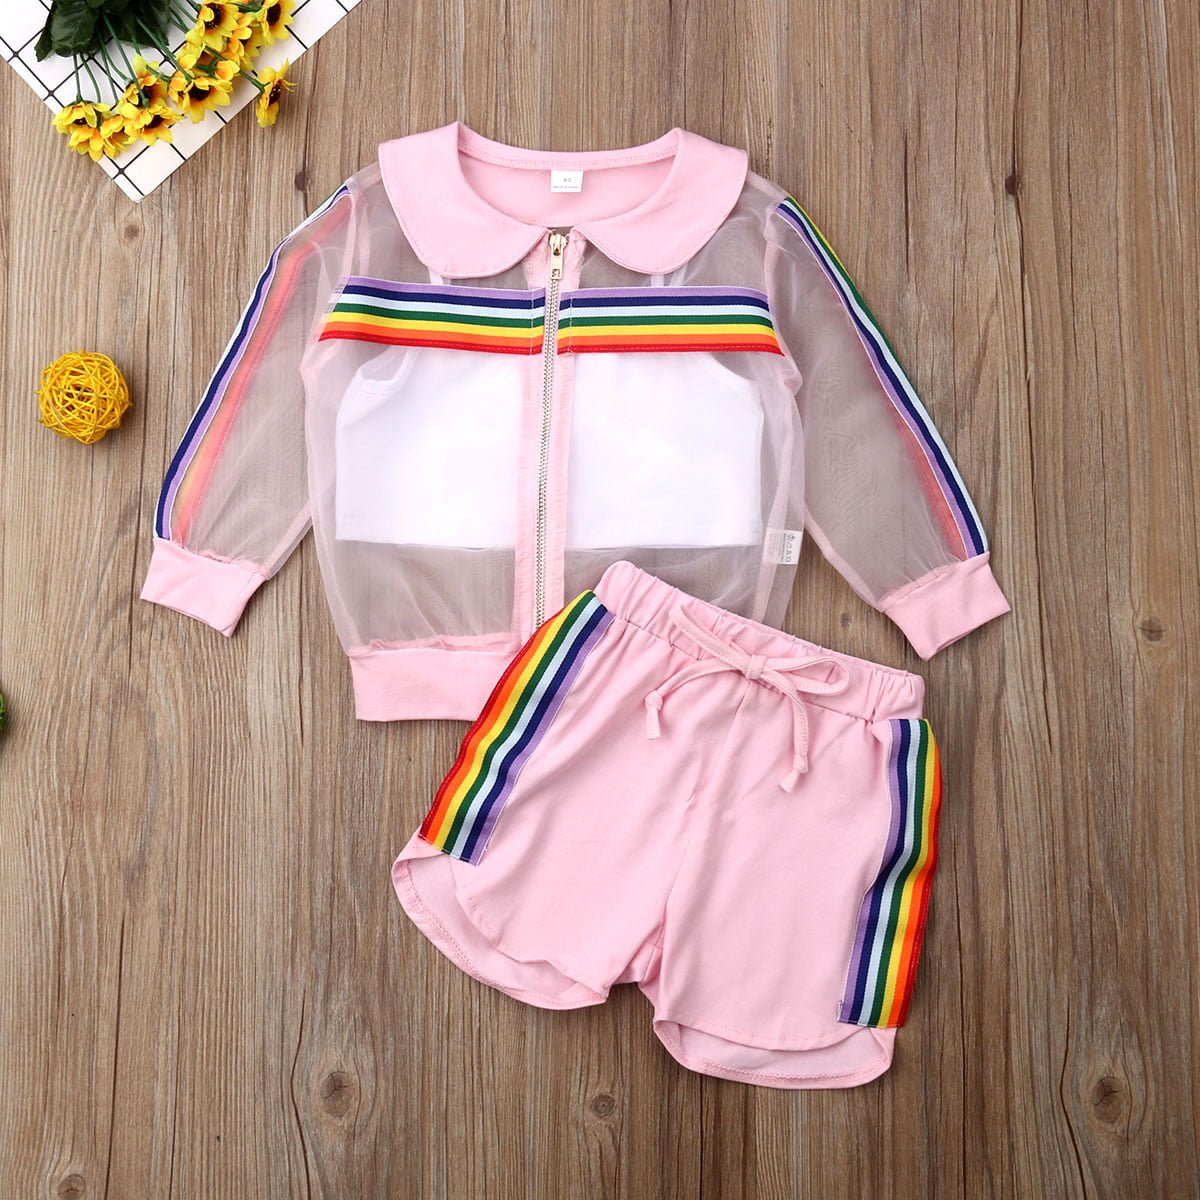 3Pcs-Toddler Baby Girls Outfits Cute Mesh Zipper Blouse Top+White Strap Vest Tank Top+Shorts Pants Kids Clothing Set 